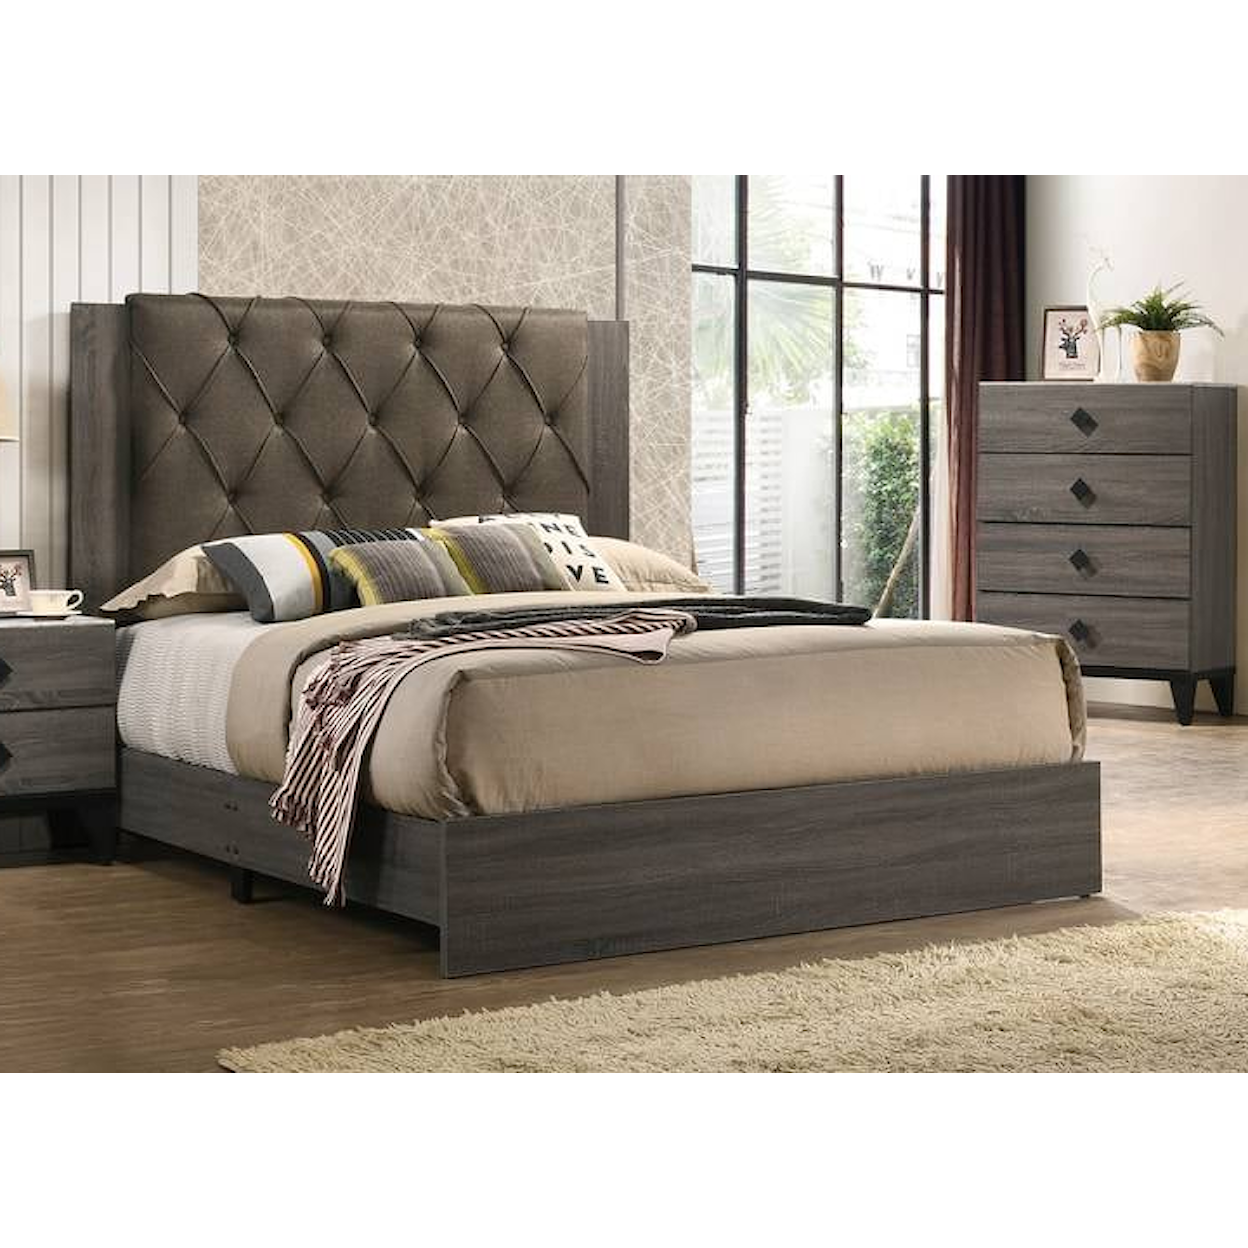 Poundex Ontario Bedroom Set ONTARIO GREY KING BED |